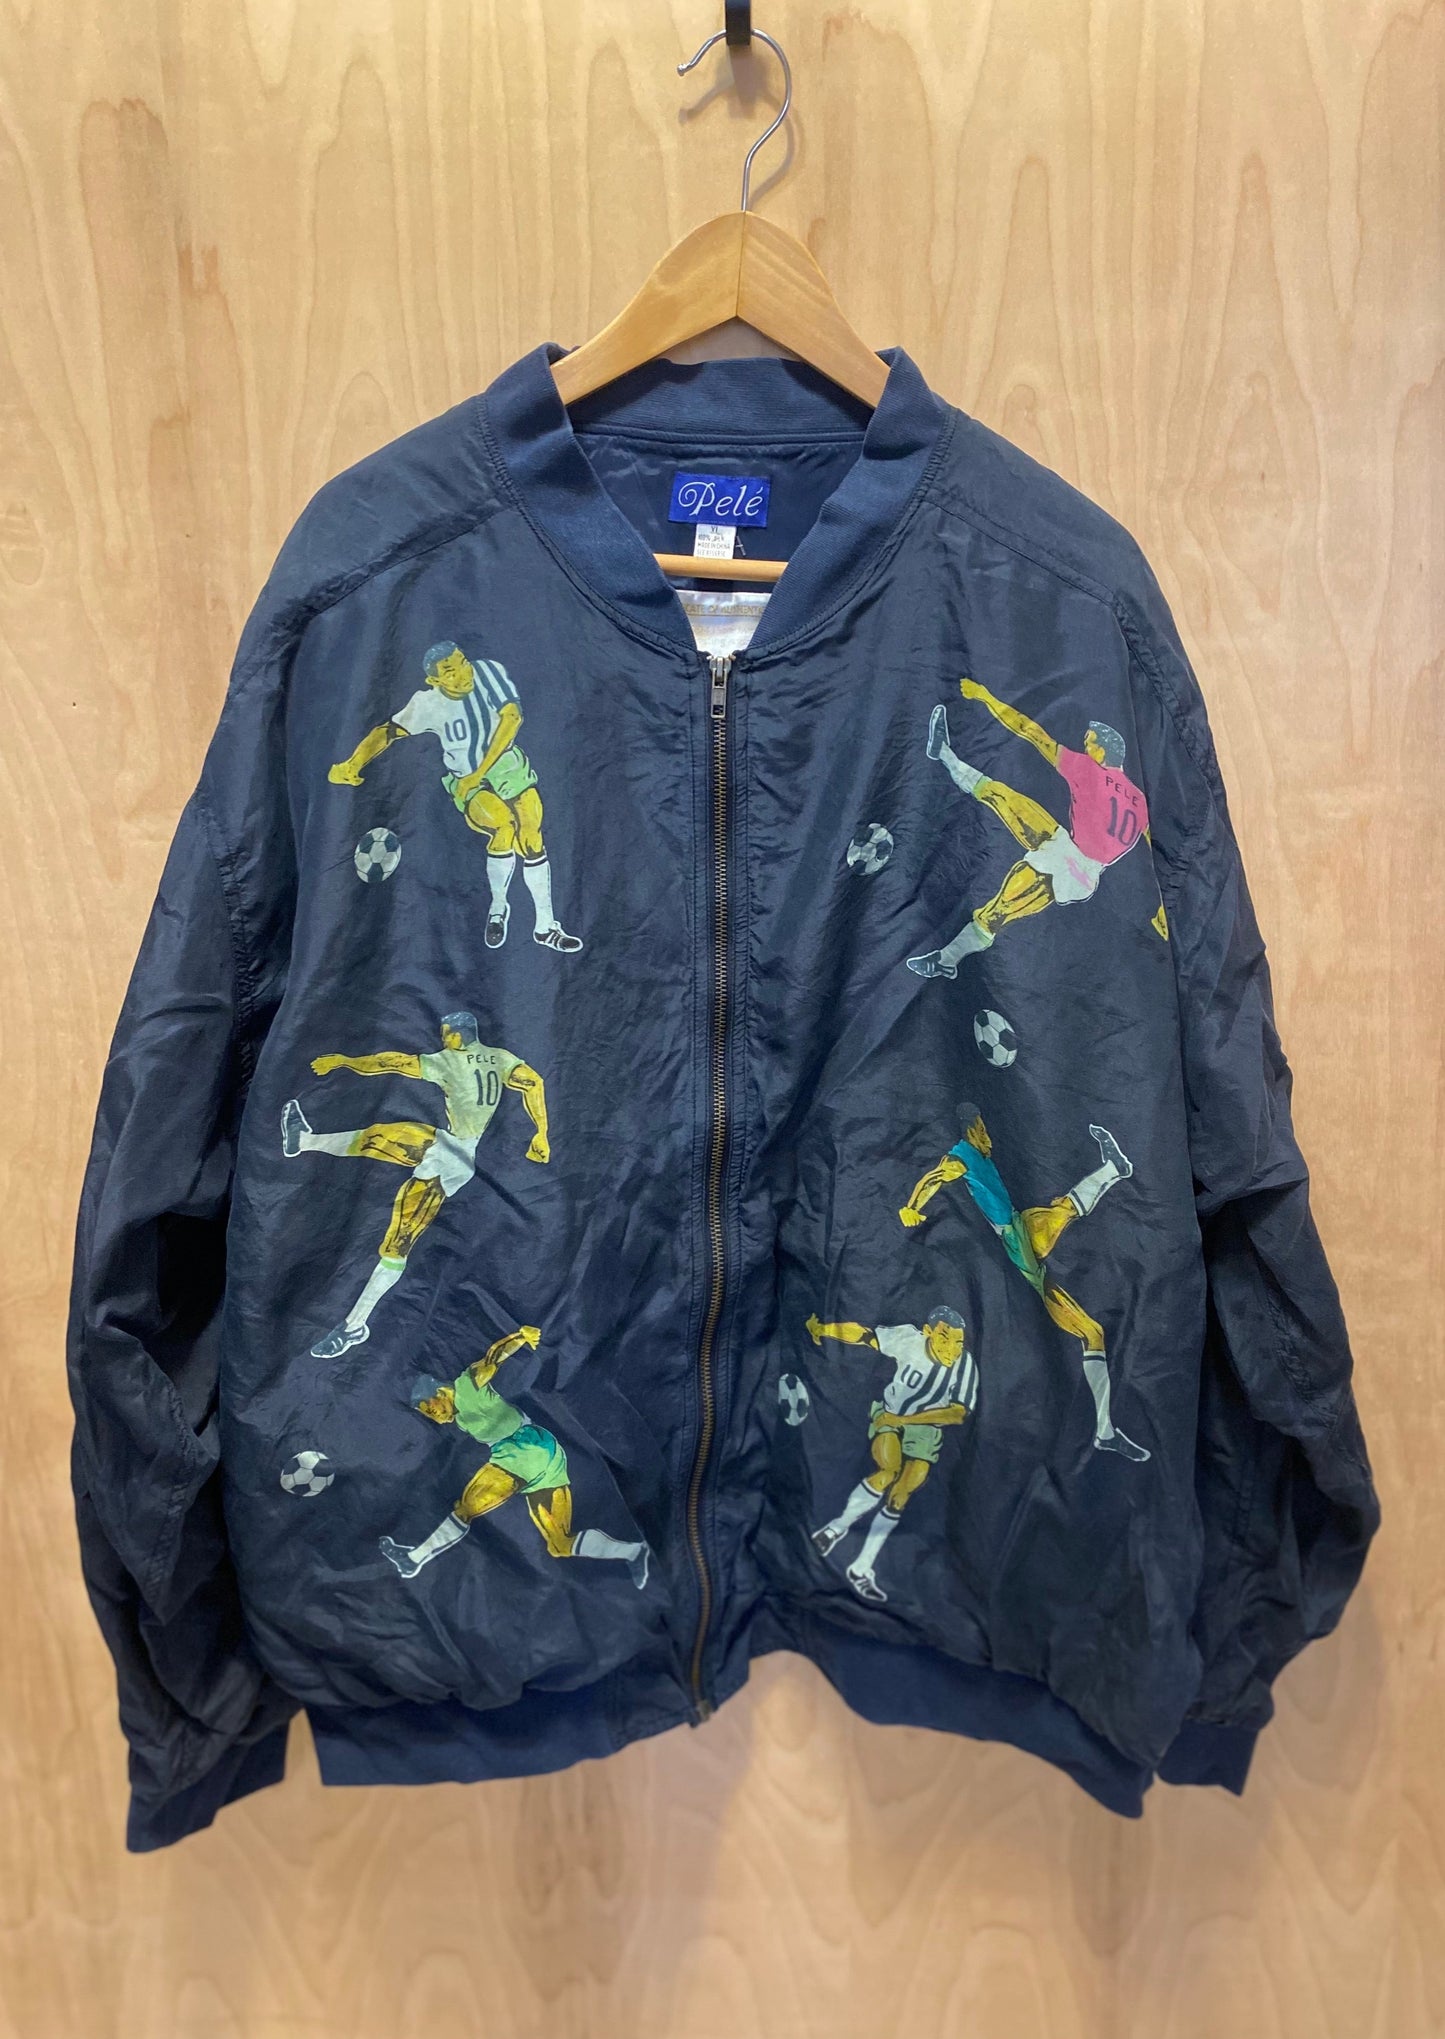 Vintage auténtica chaqueta bomber de fútbol "Pele" (XL)